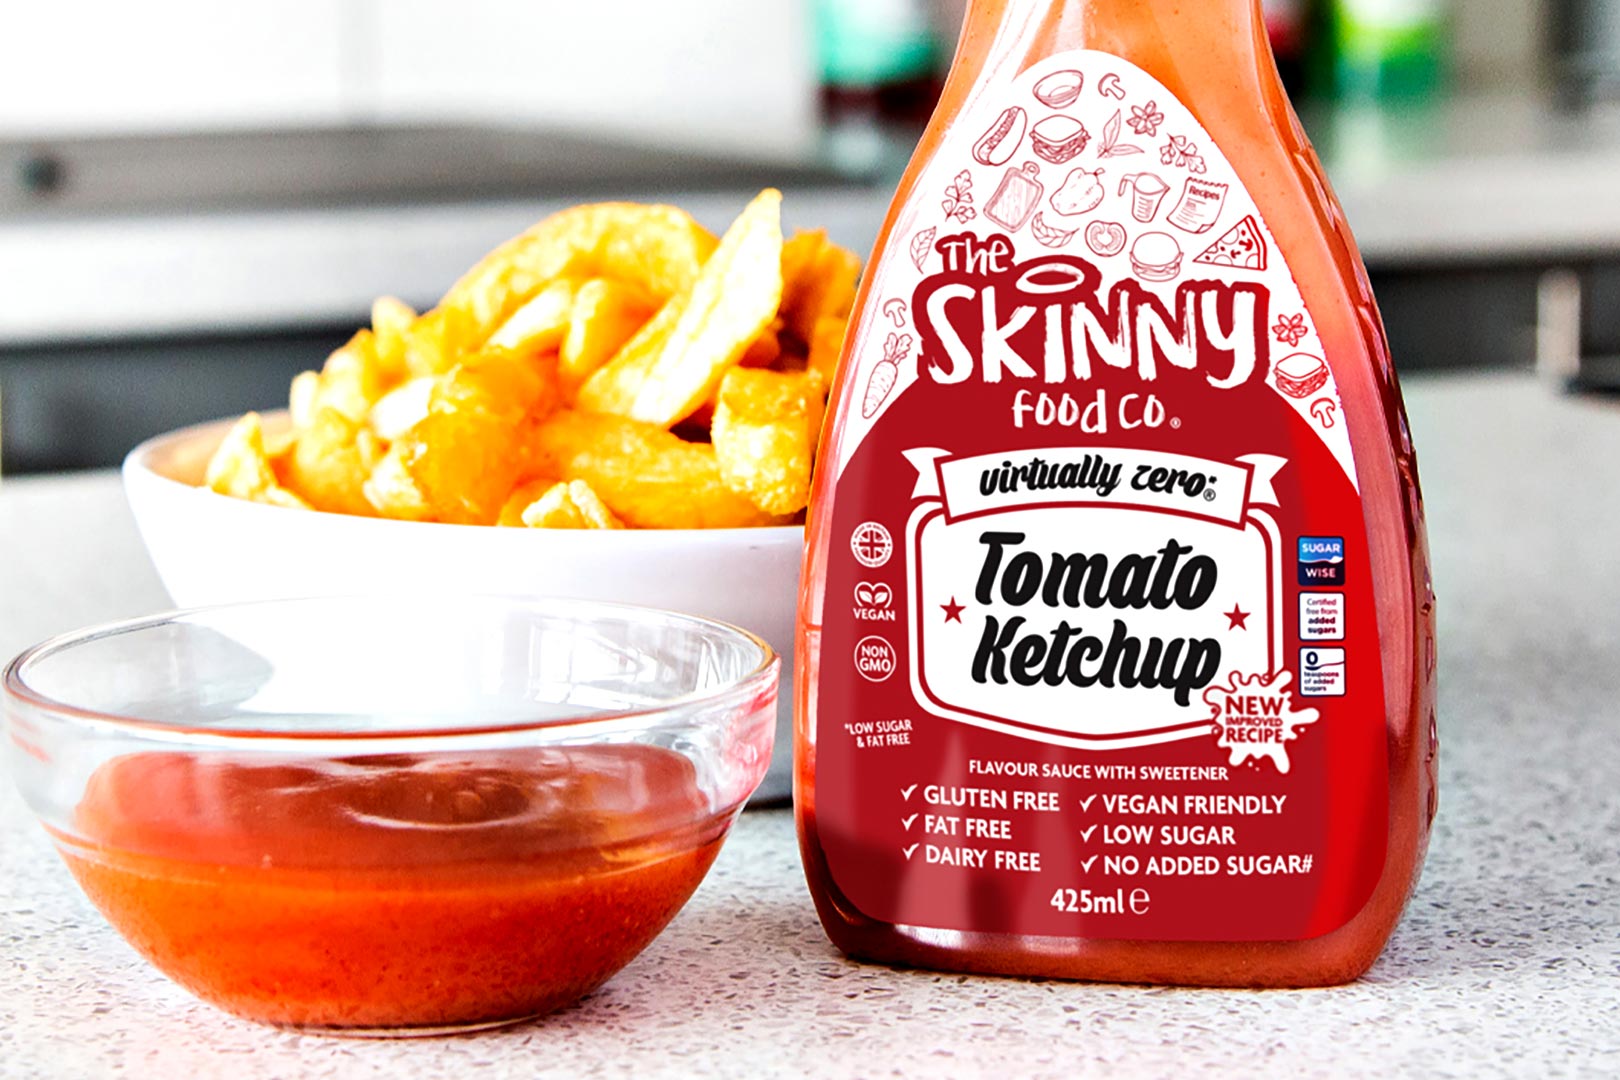 Skinny Food Co Improves Tomato Ketchup